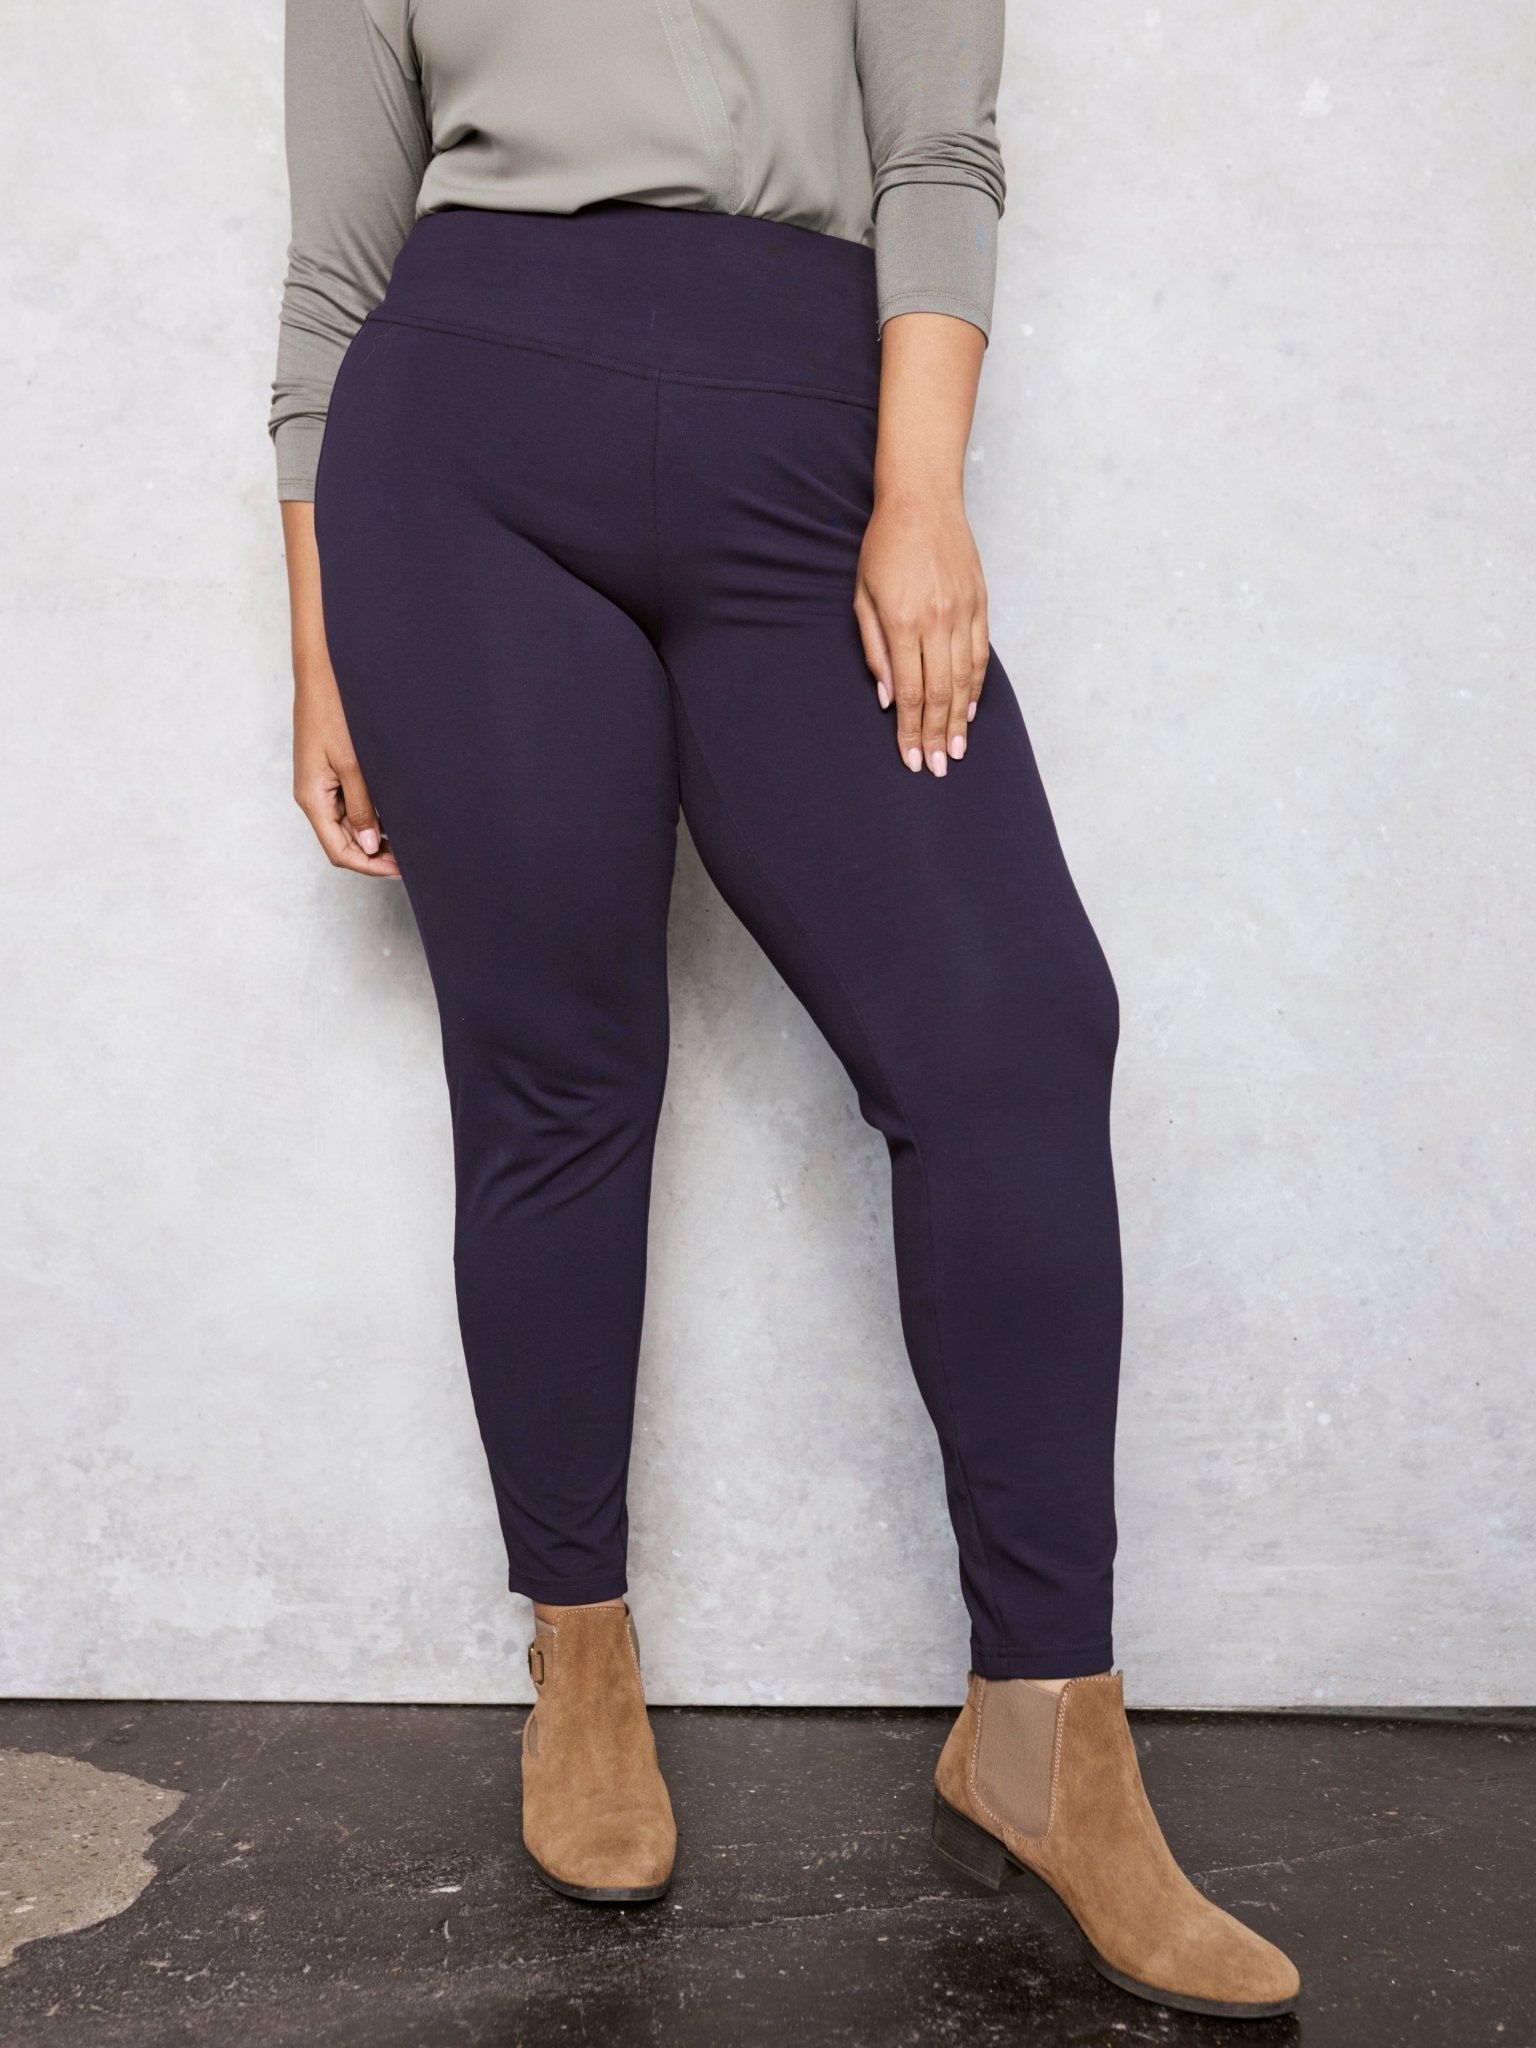 Dressbarn Roz & Ali Women's Plus Size Tummy Control Leggings - Black, 2x :  Target